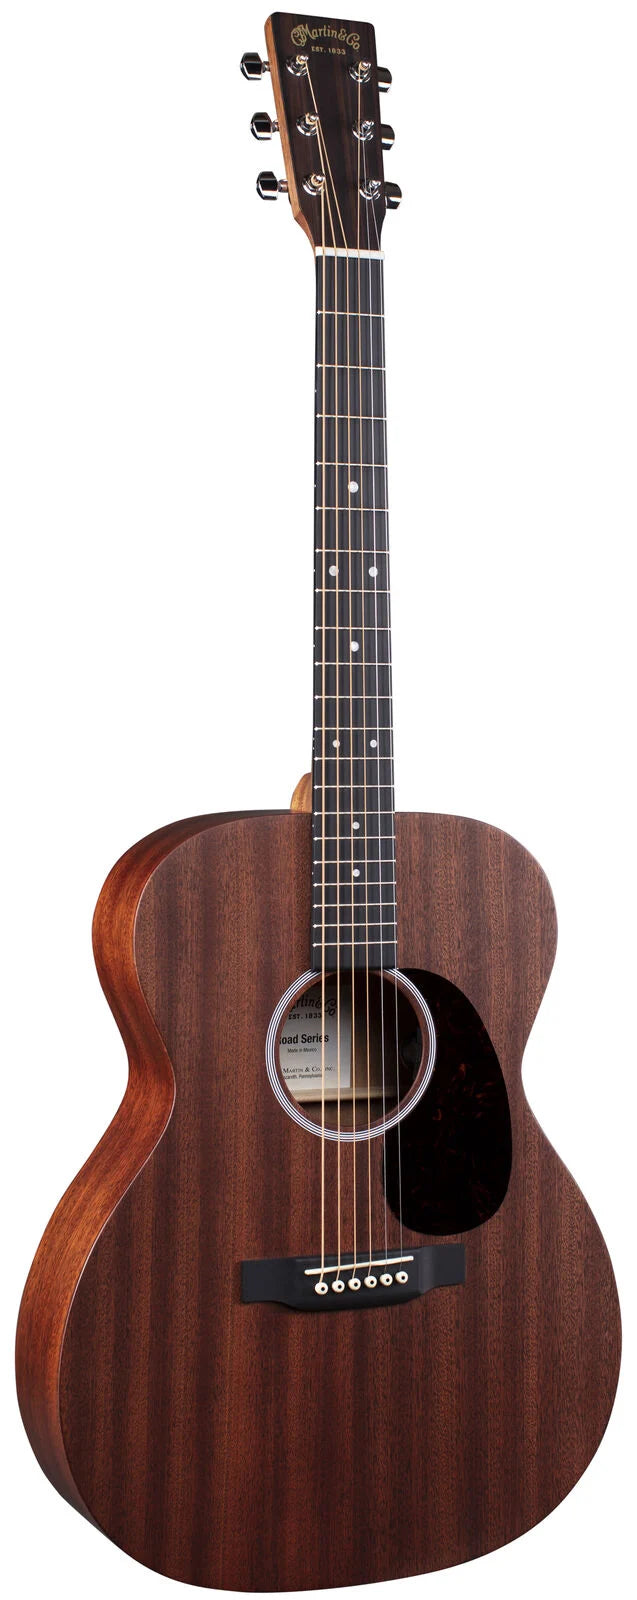 Martin 000-10E Acoustic Guitar made in Mexico